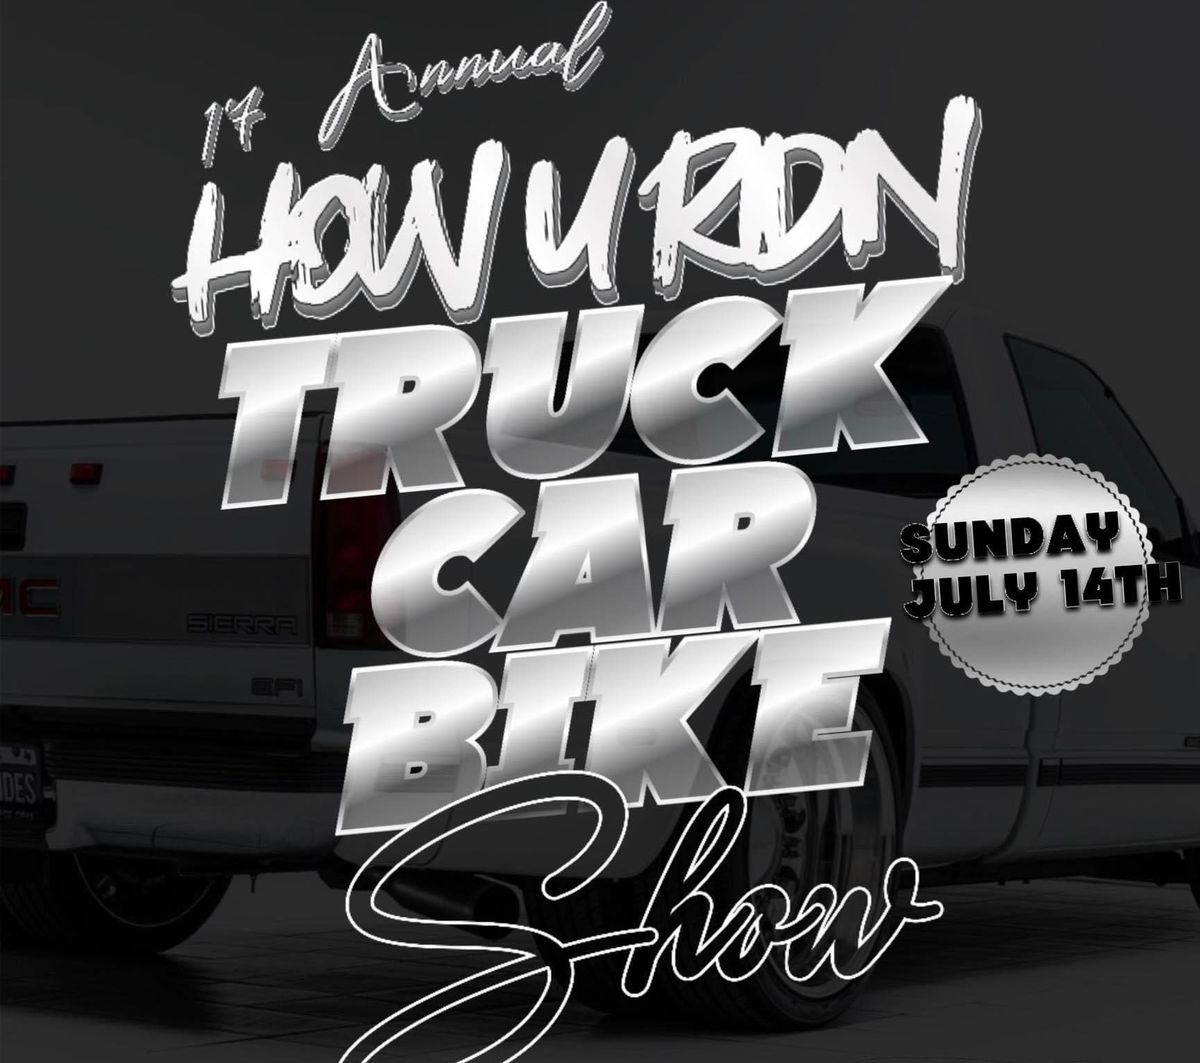 HowURidin\u2019 Truck, Car, & Bike Show